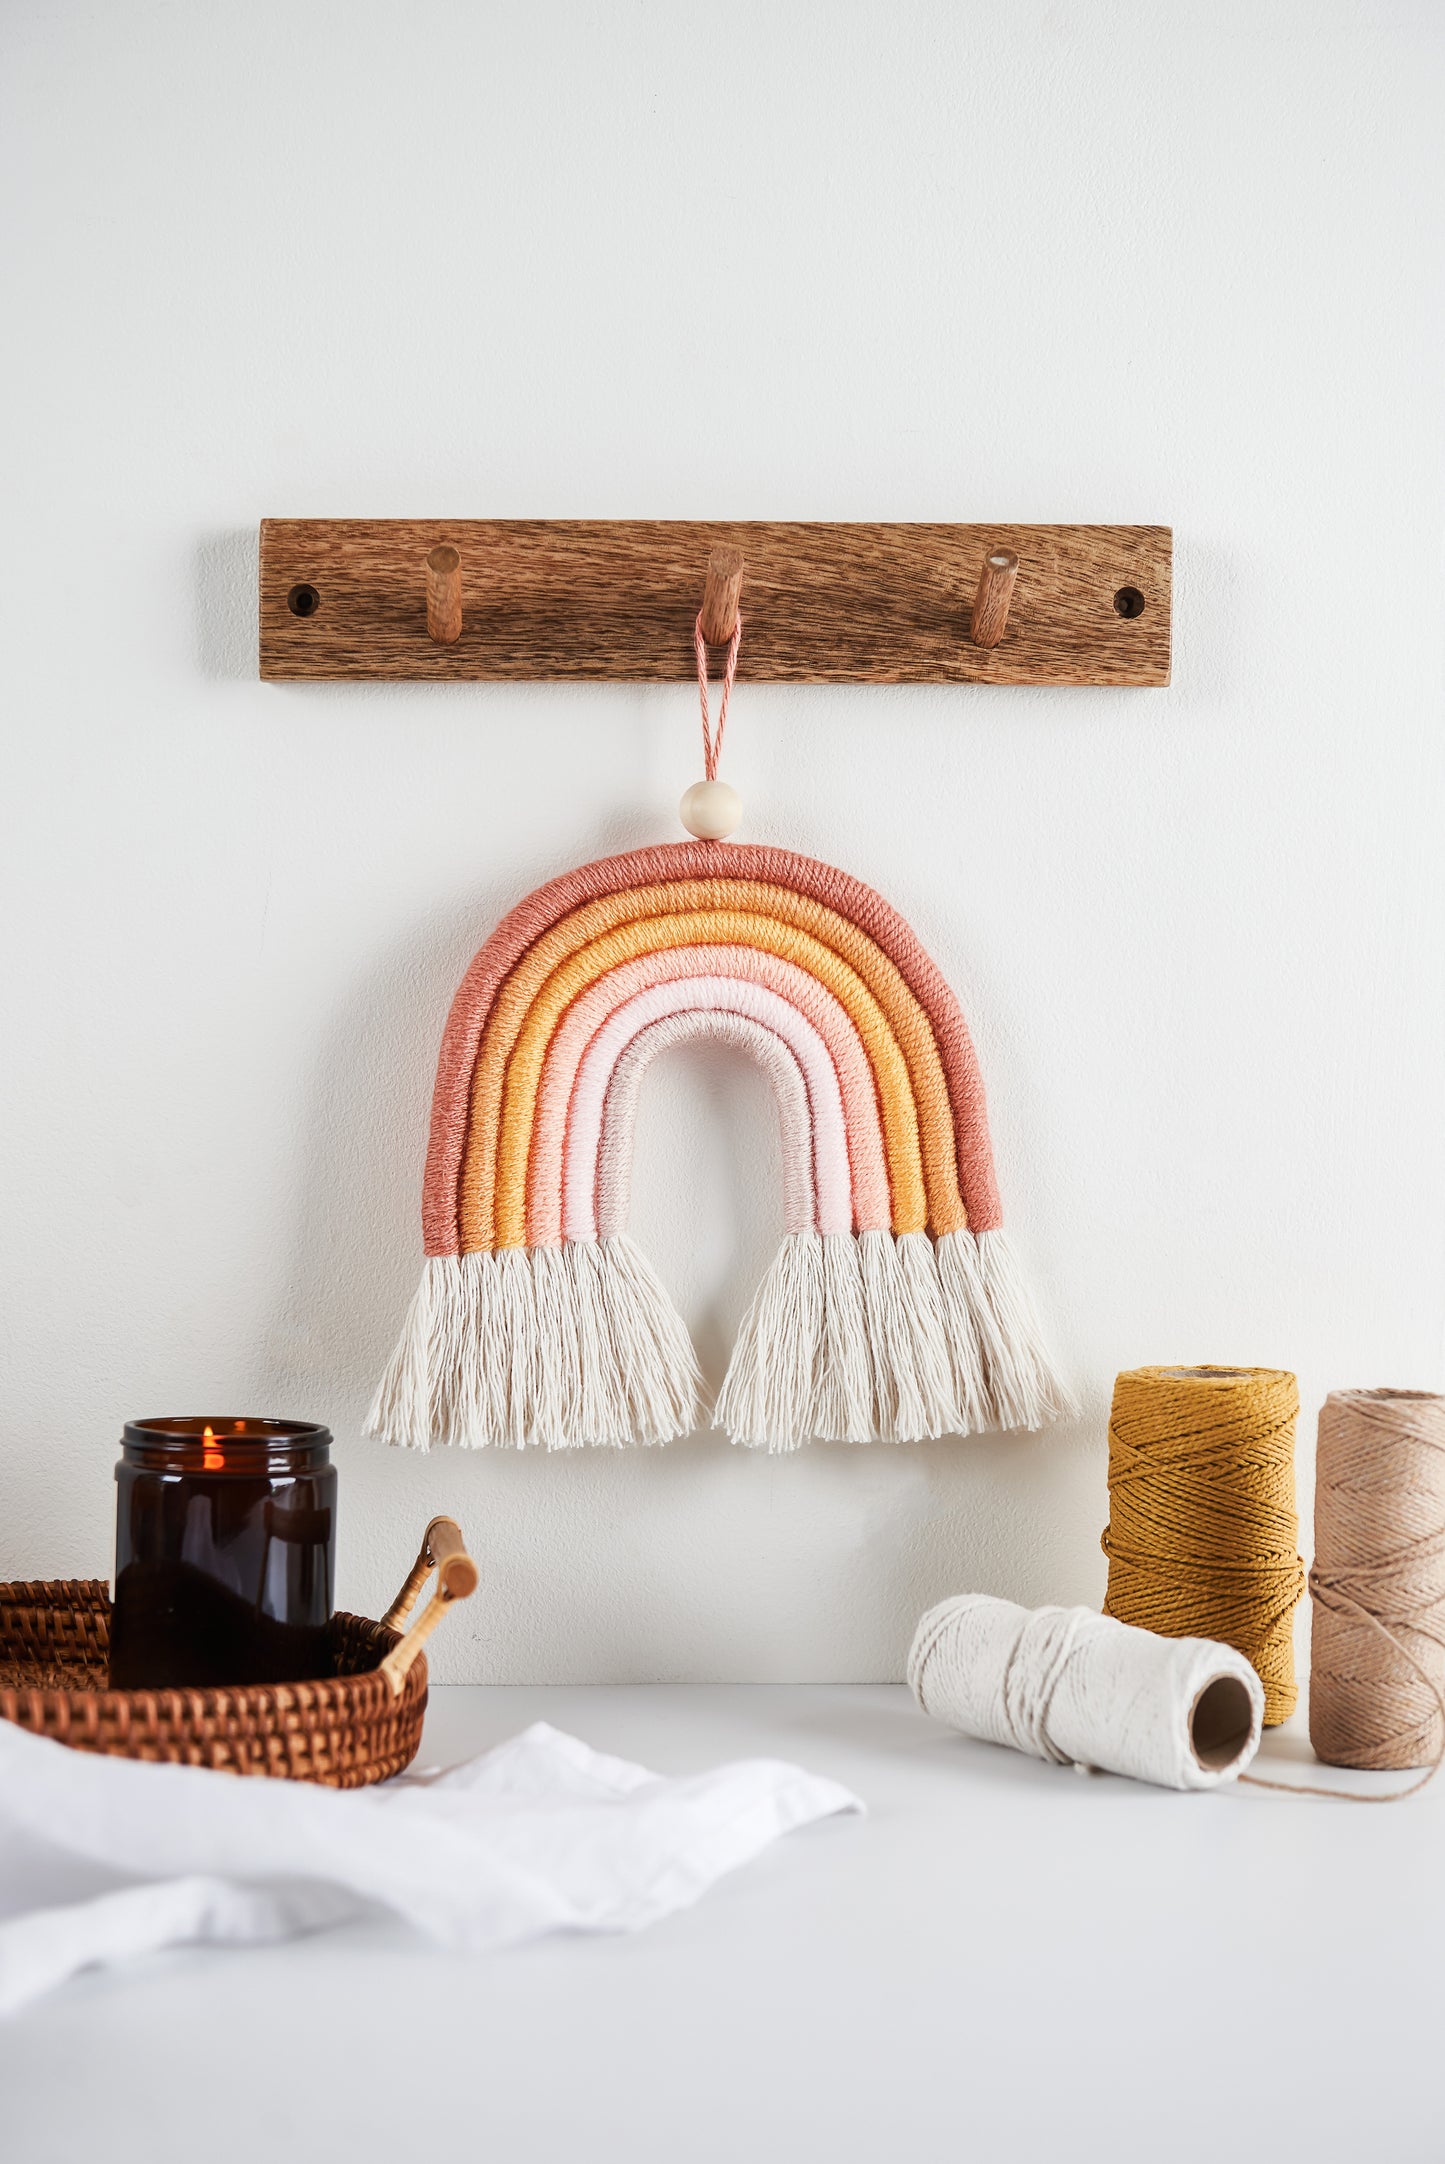 Make Your Own Peachy Rainbow Macrame Craft Kit